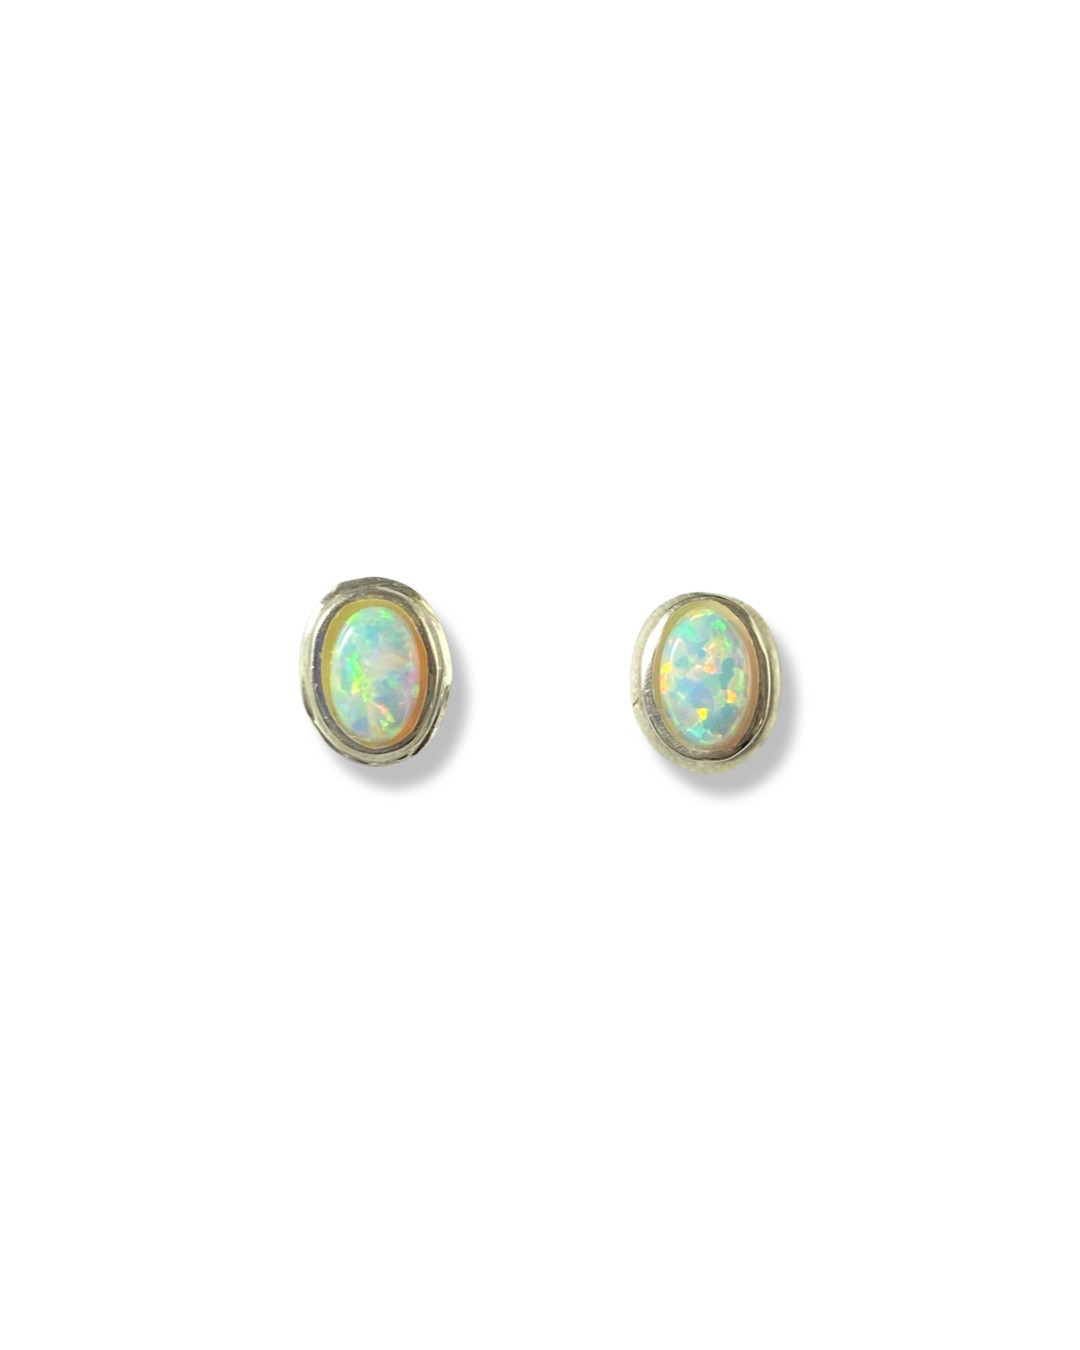 Pair of oval cut opal earrings set in silver mount weighing 0.91 grams - Image 2 of 2